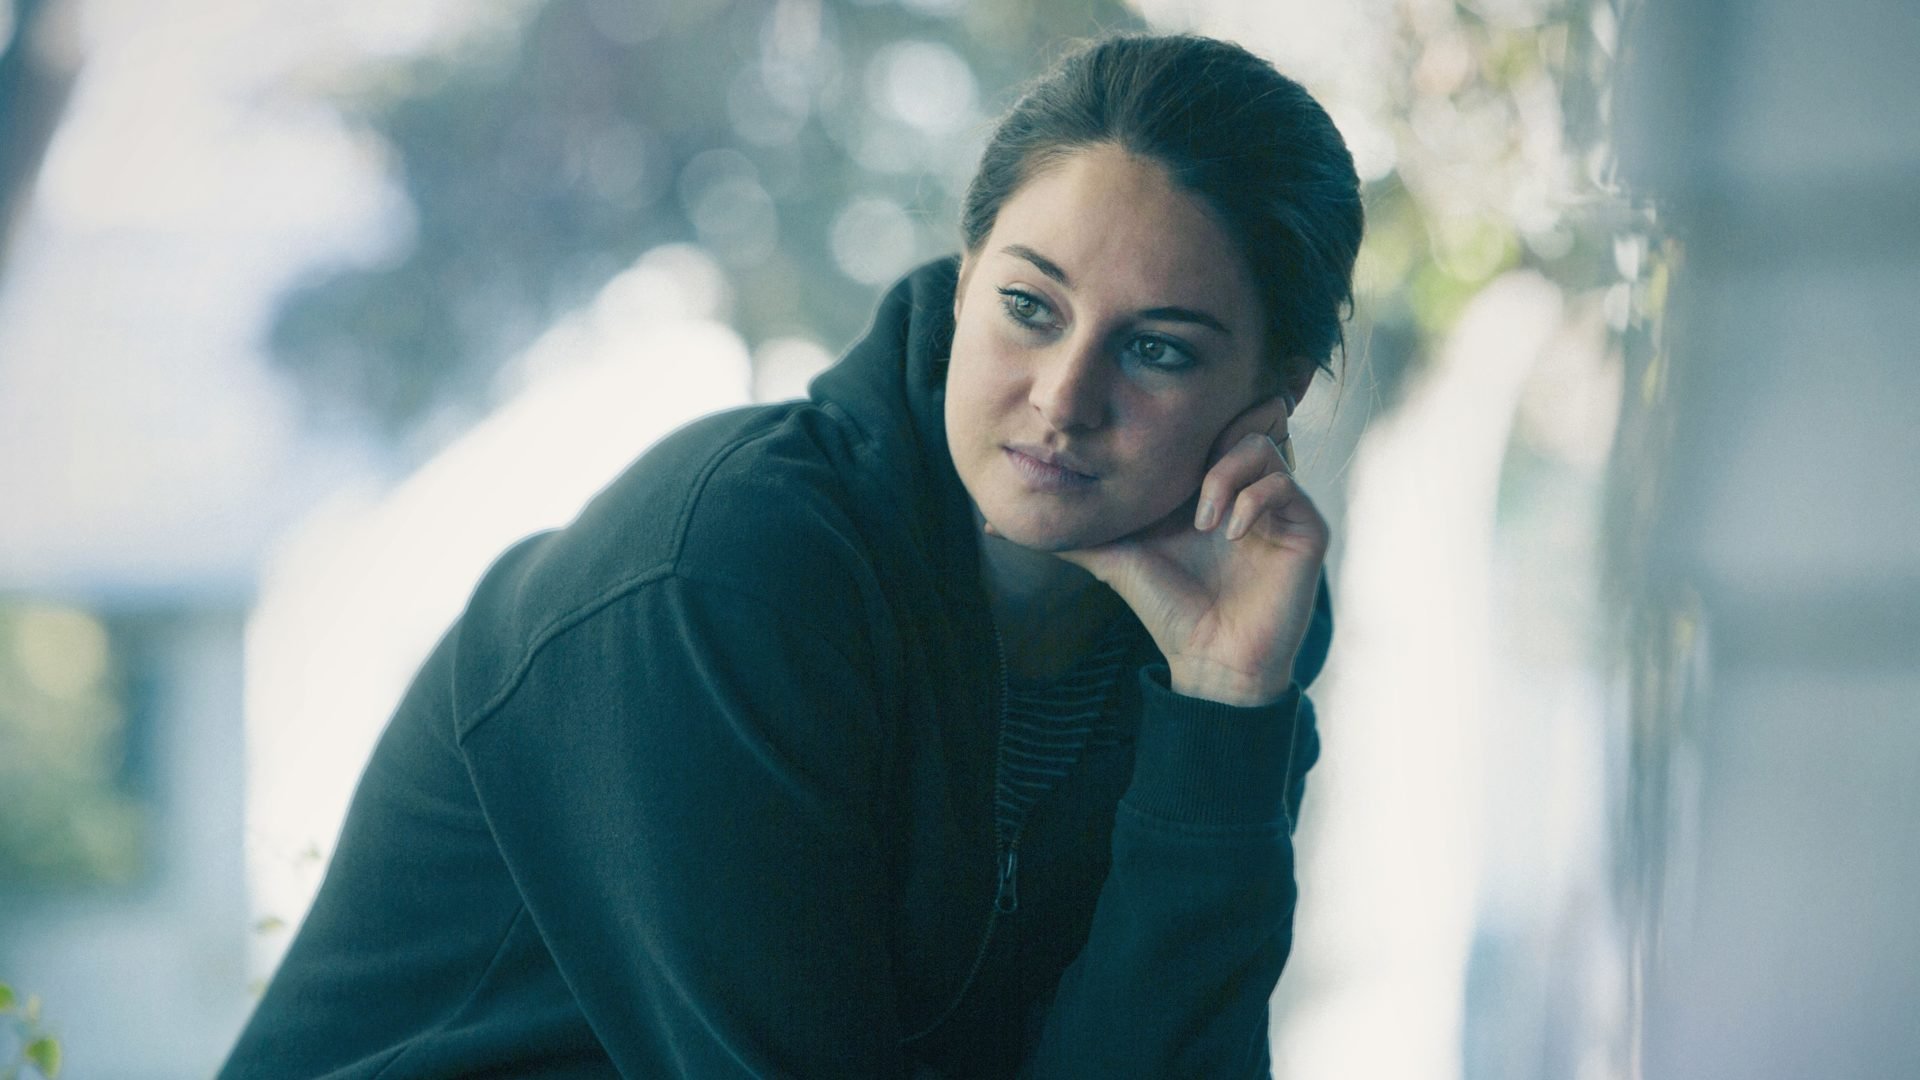 Kaitlyn Dever negocia para interpretar Abby na série de The Last of Us, diz  rumor